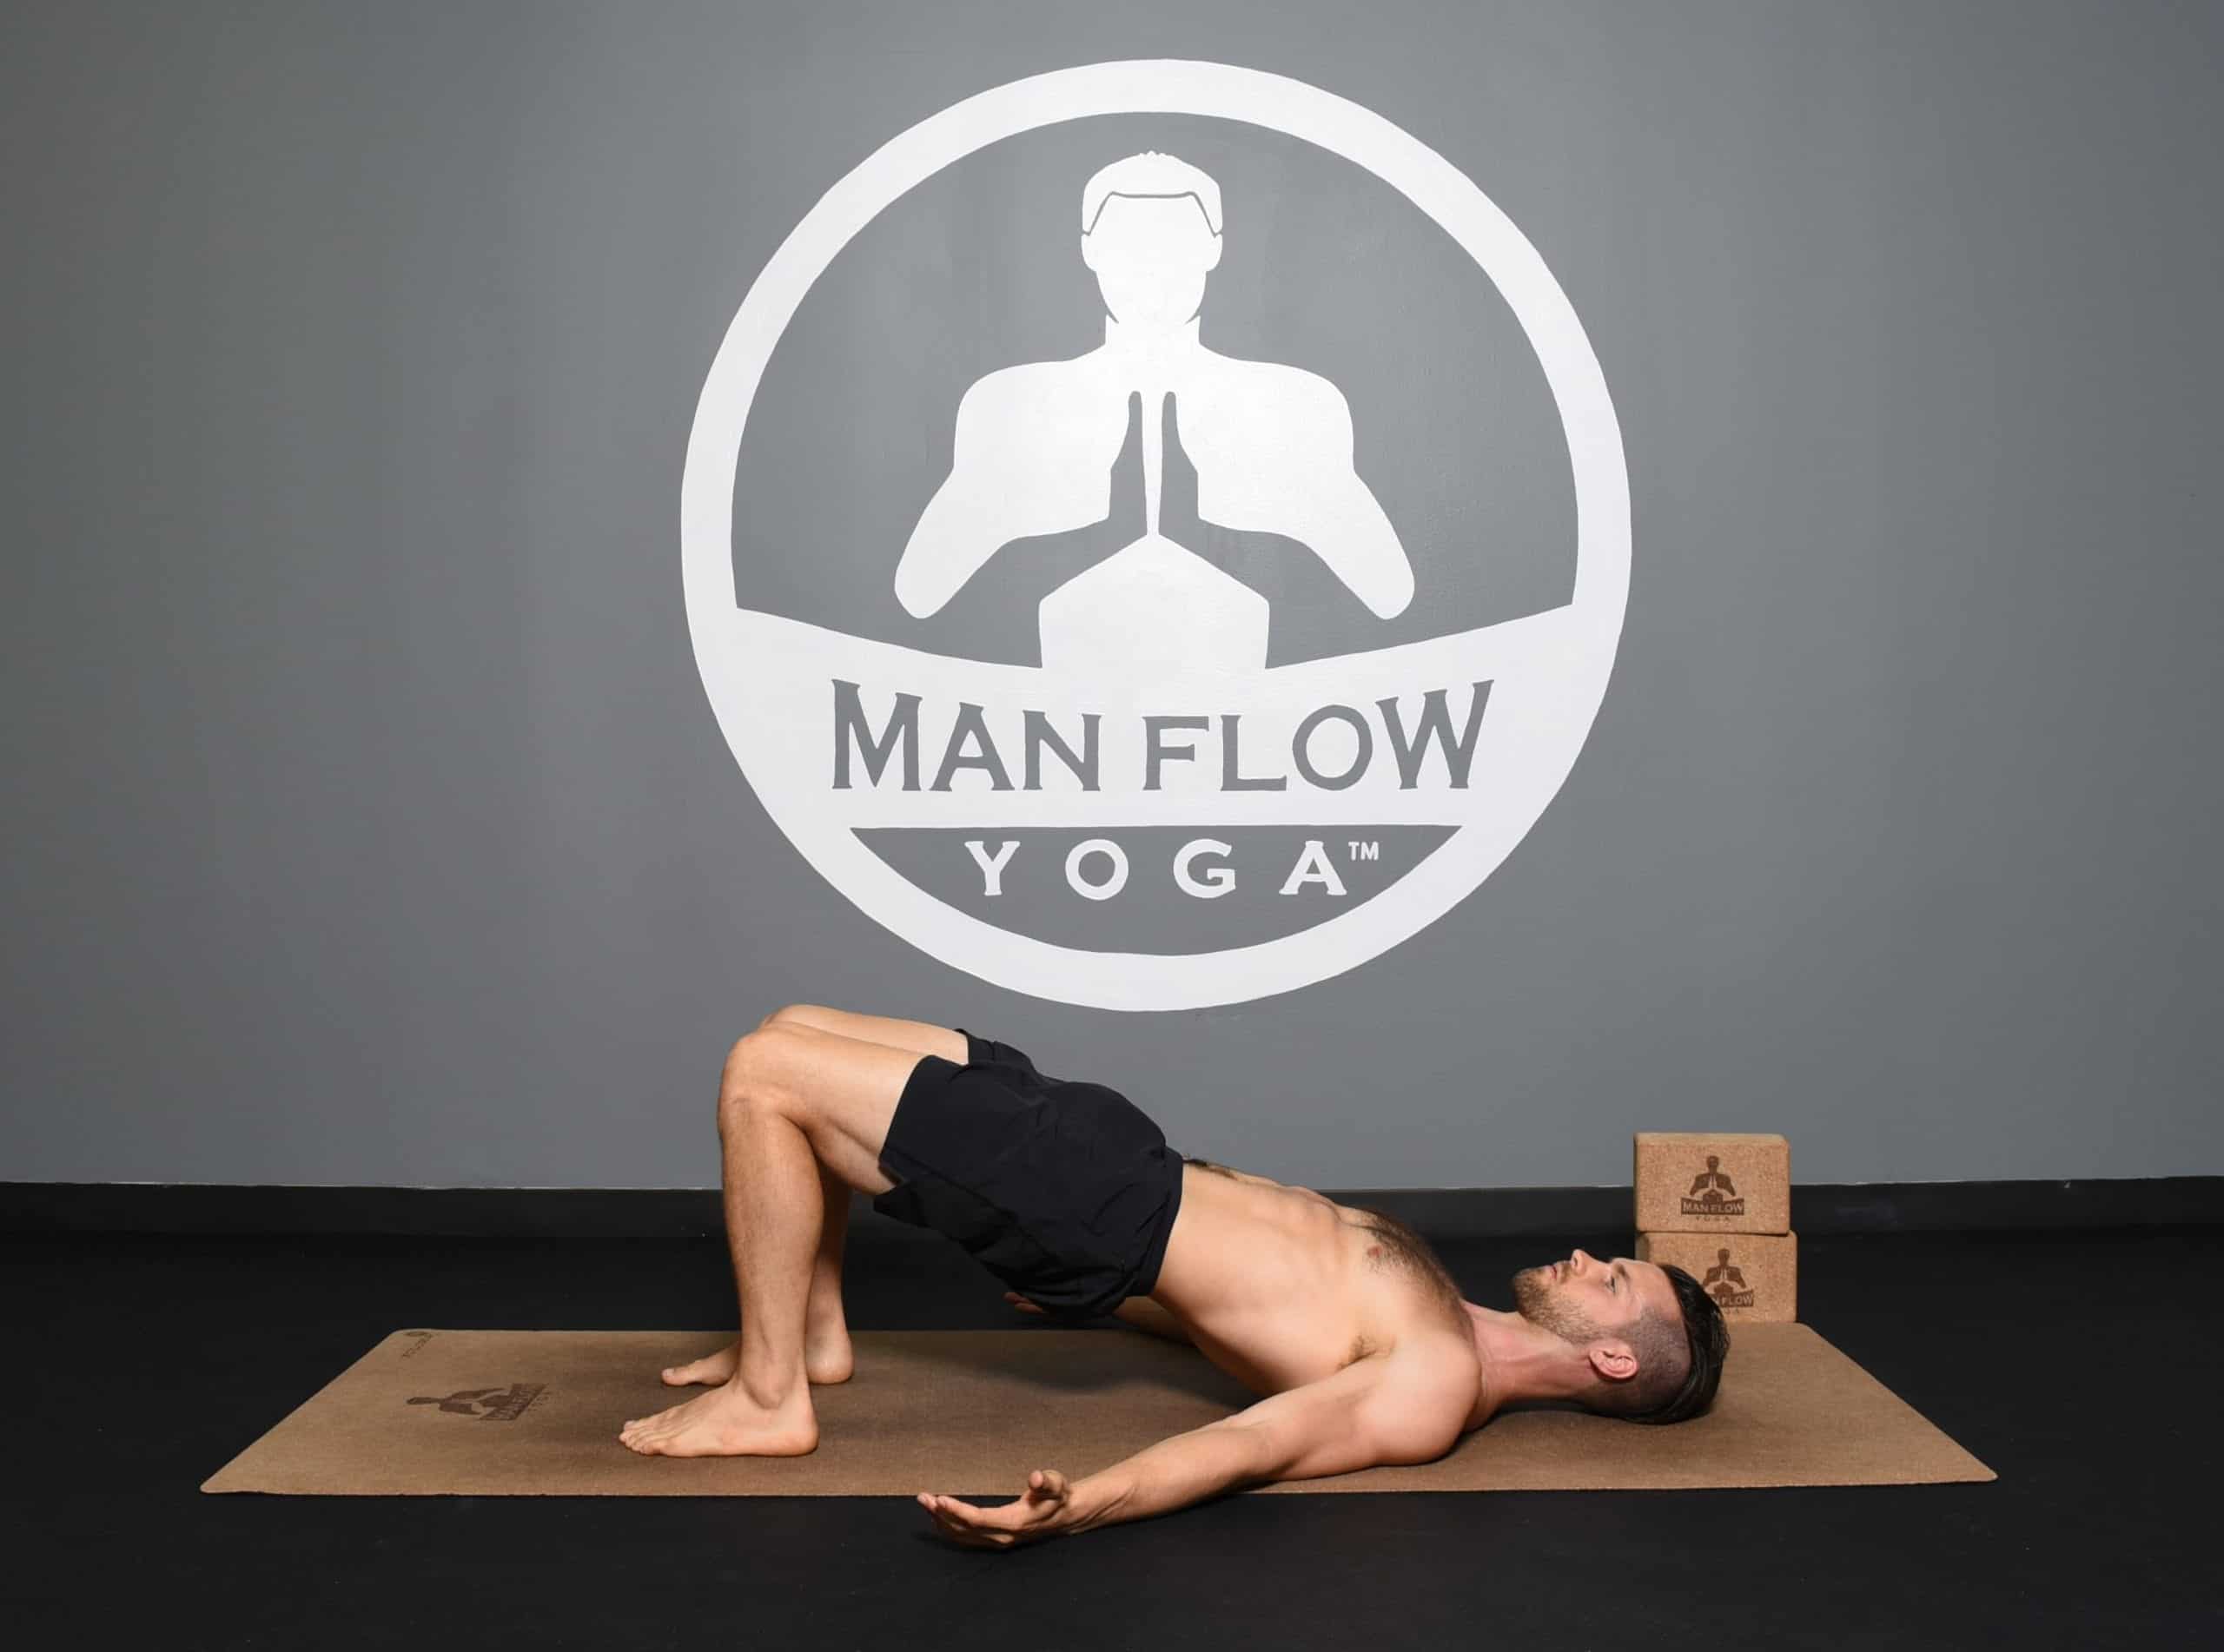 Morning Yoga Poses for Energy - Bridge Pose